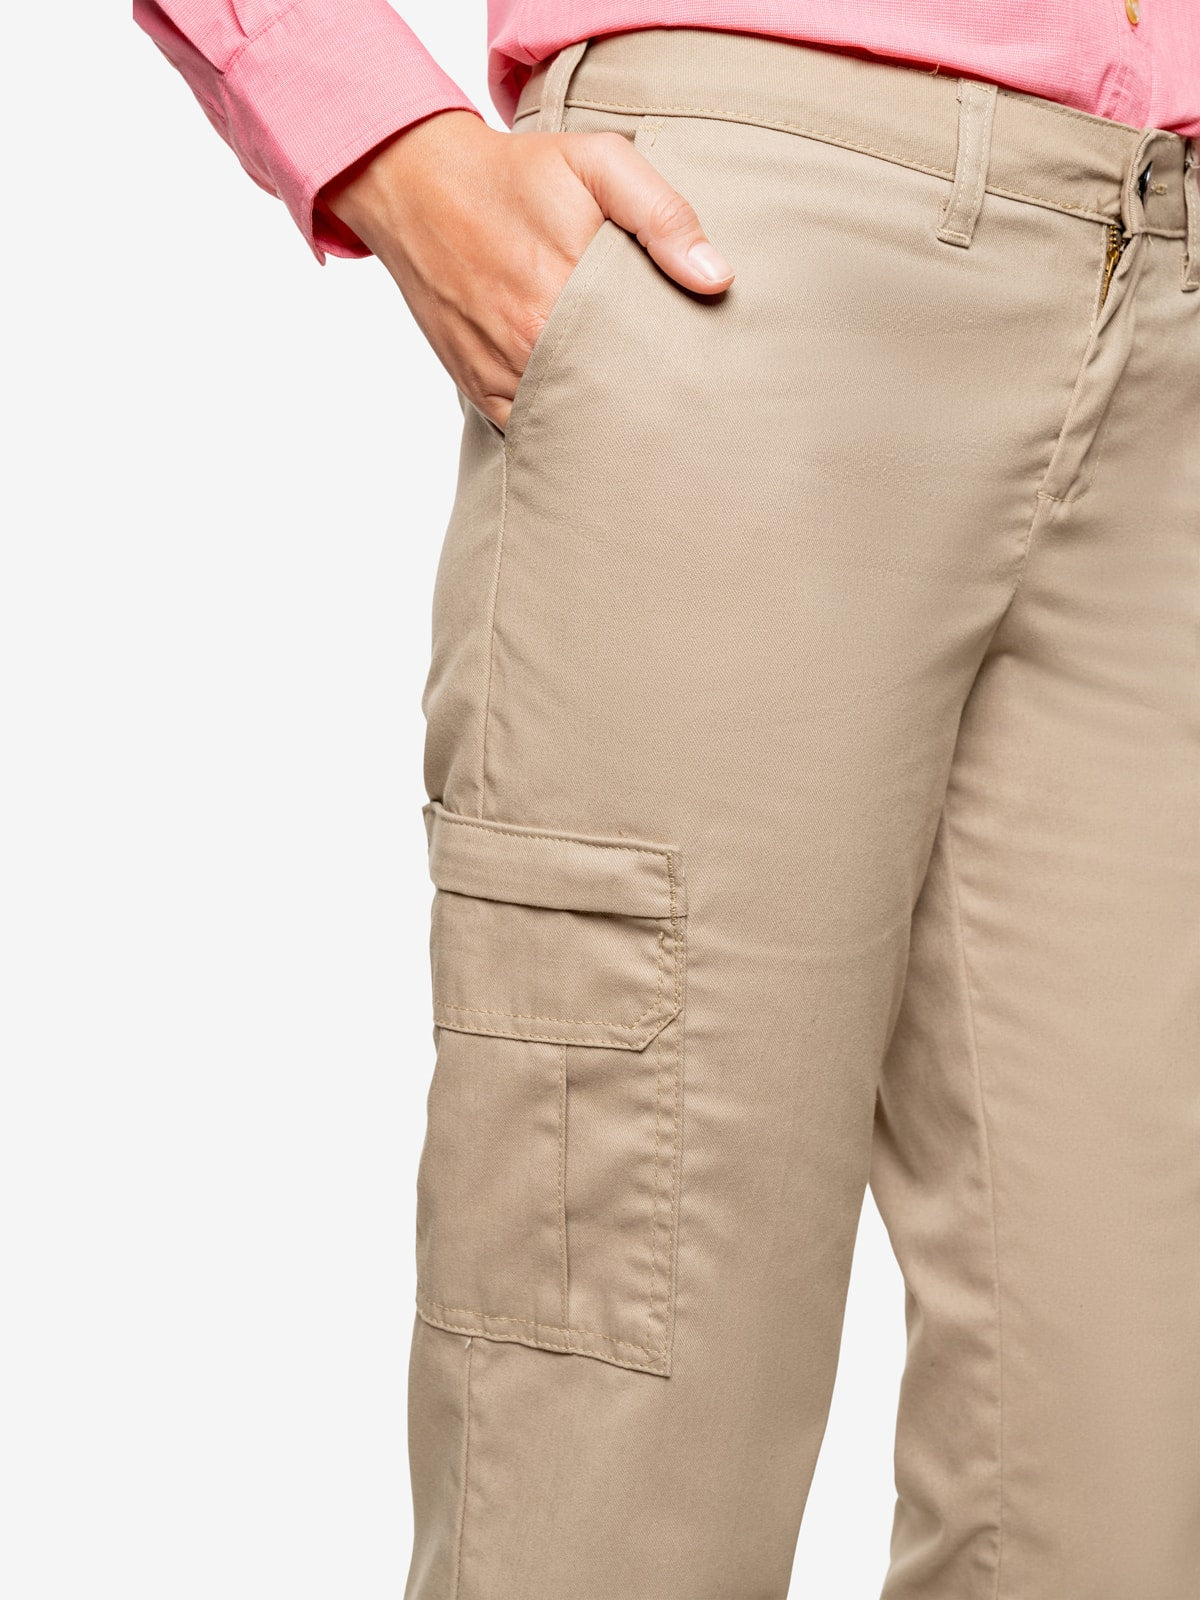 Women's Insect Repellent Cargo Pants